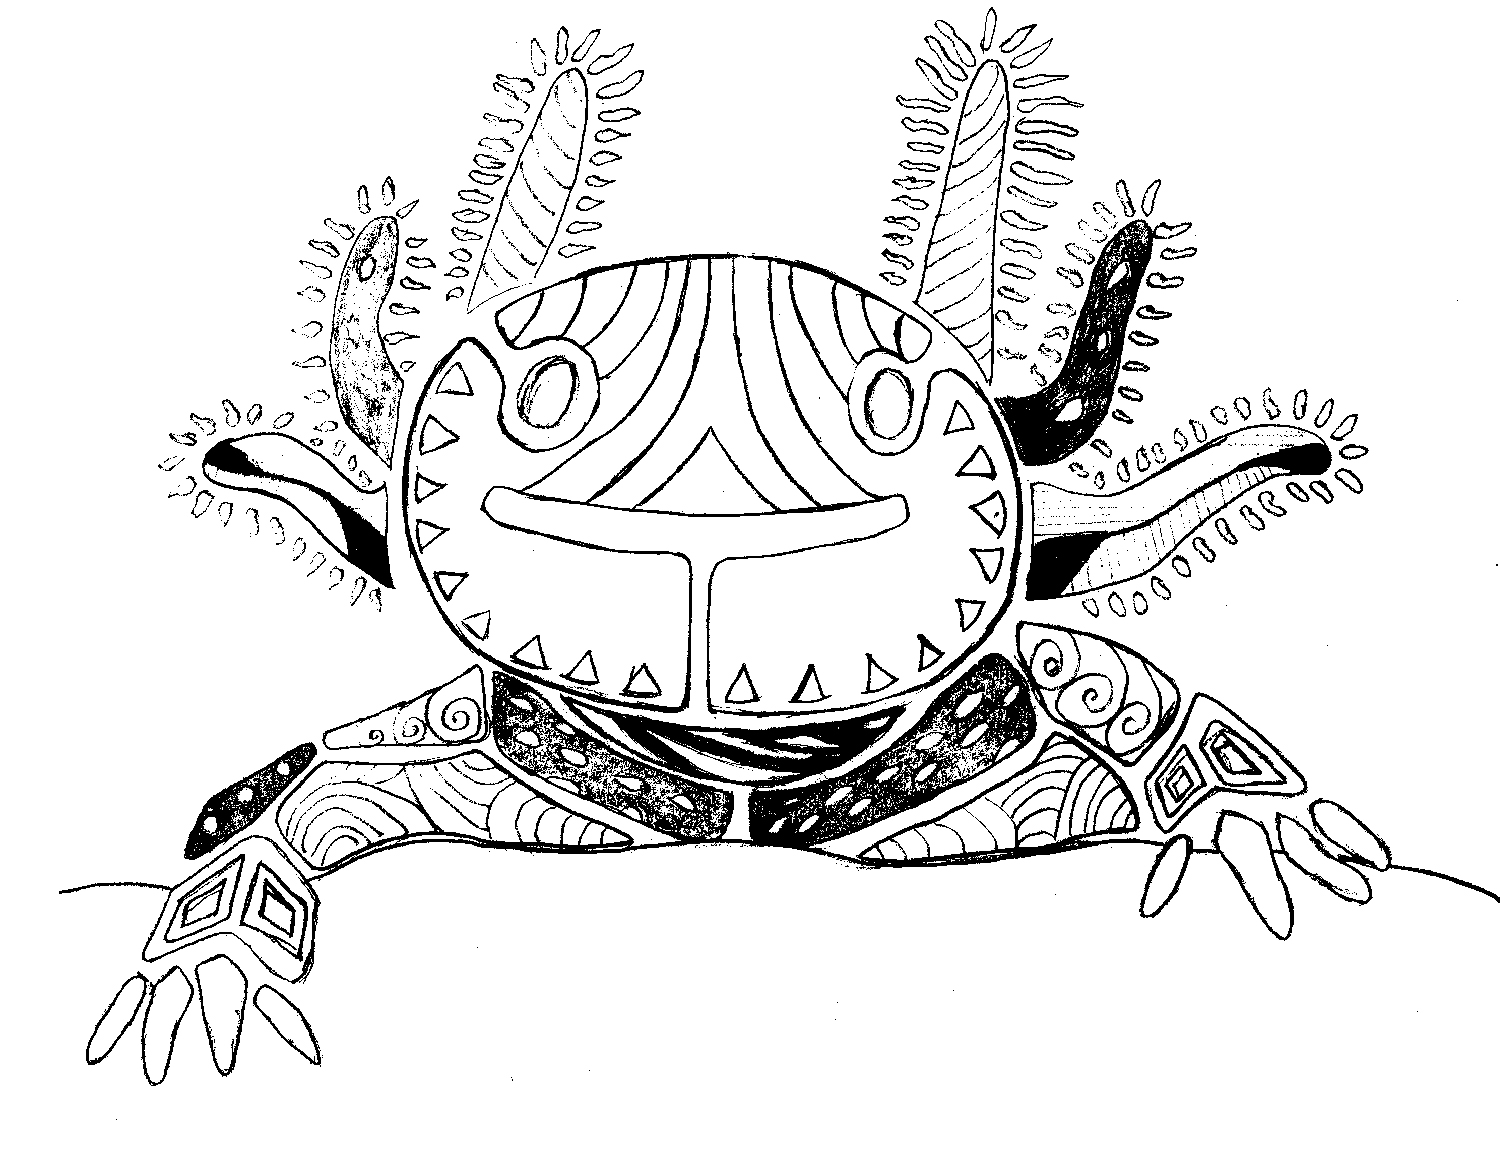 Axolotl_sketch3